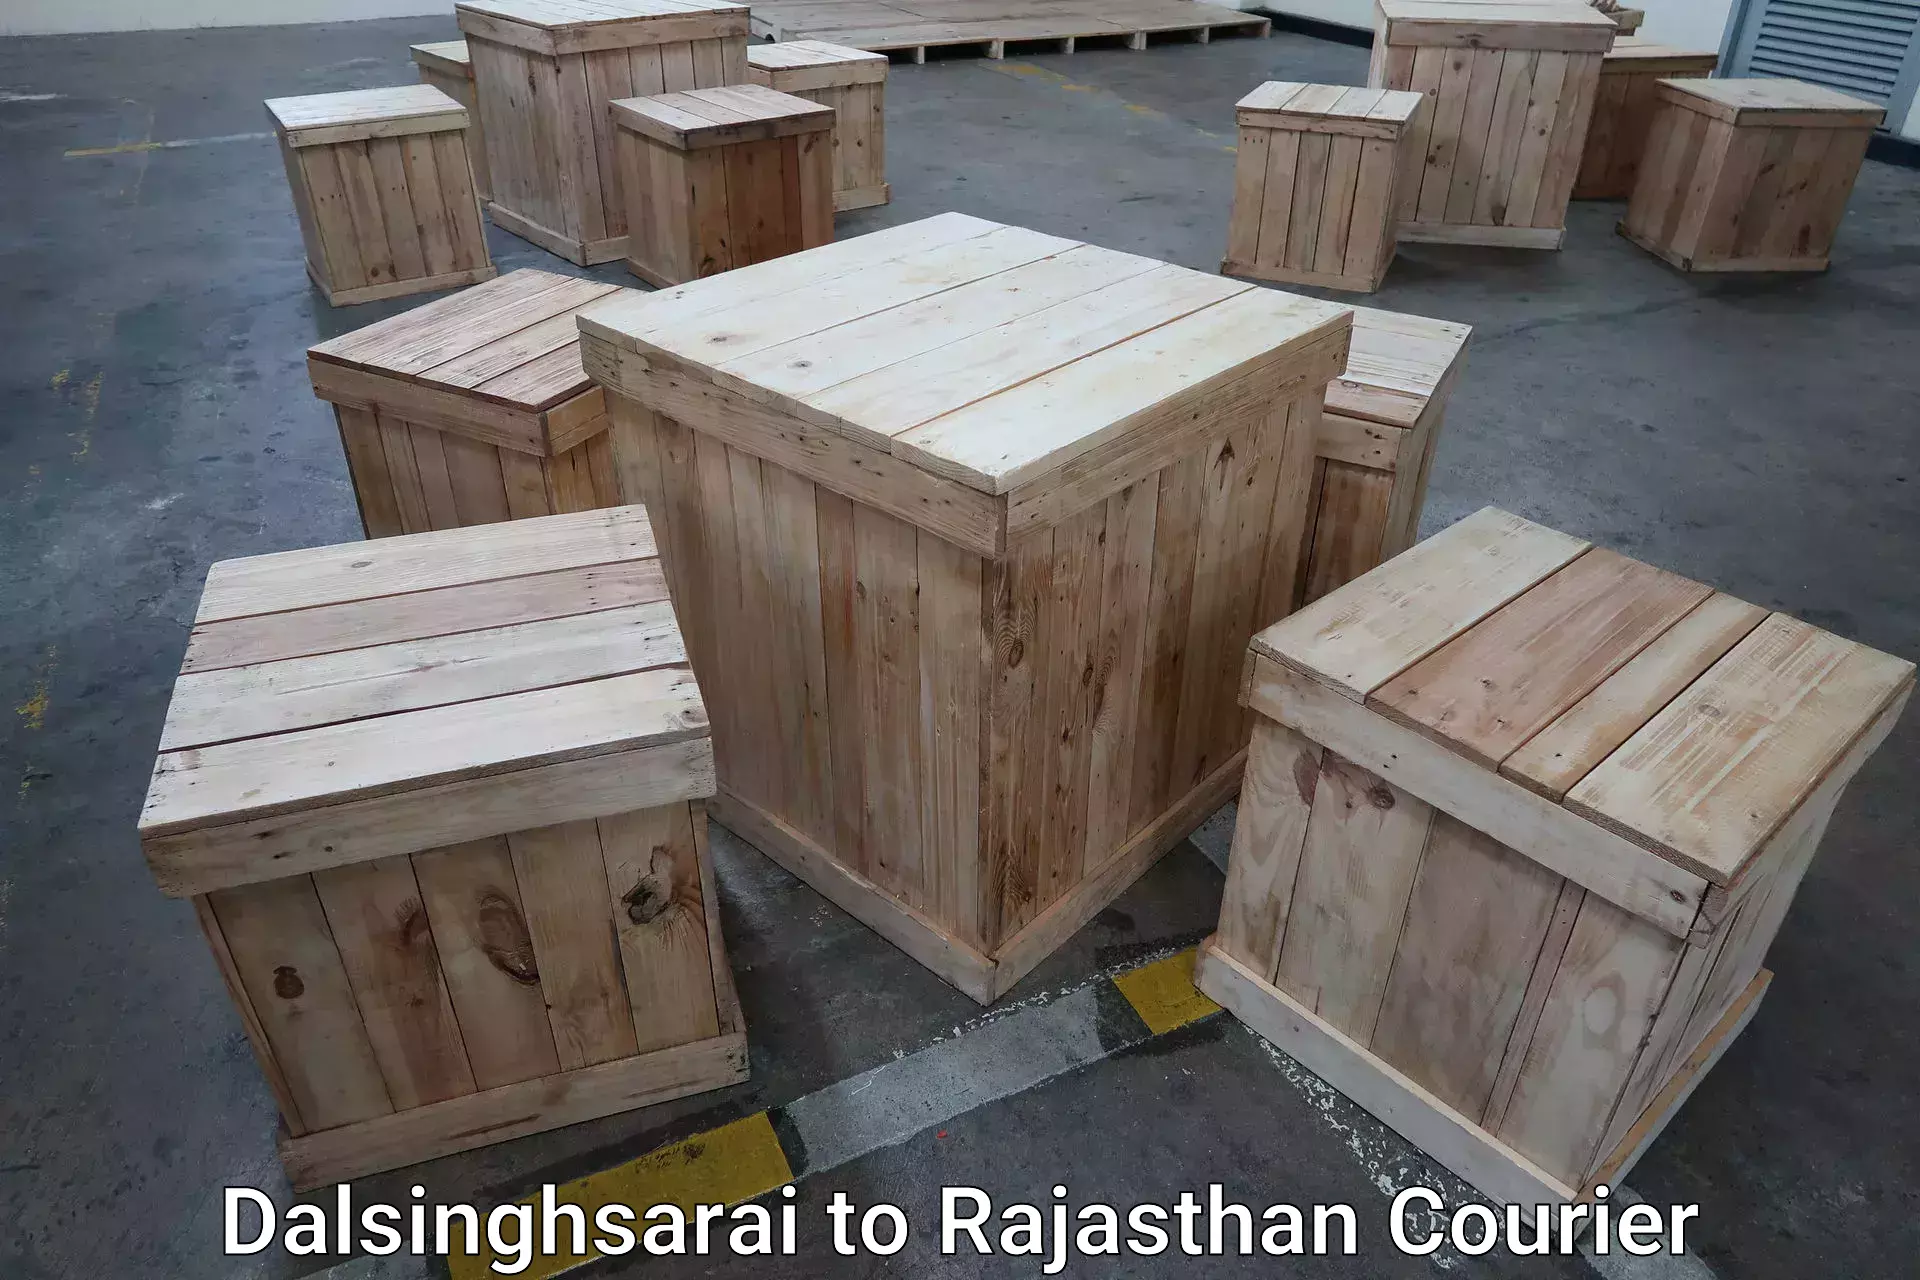 Luggage shipment specialists Dalsinghsarai to Kawai